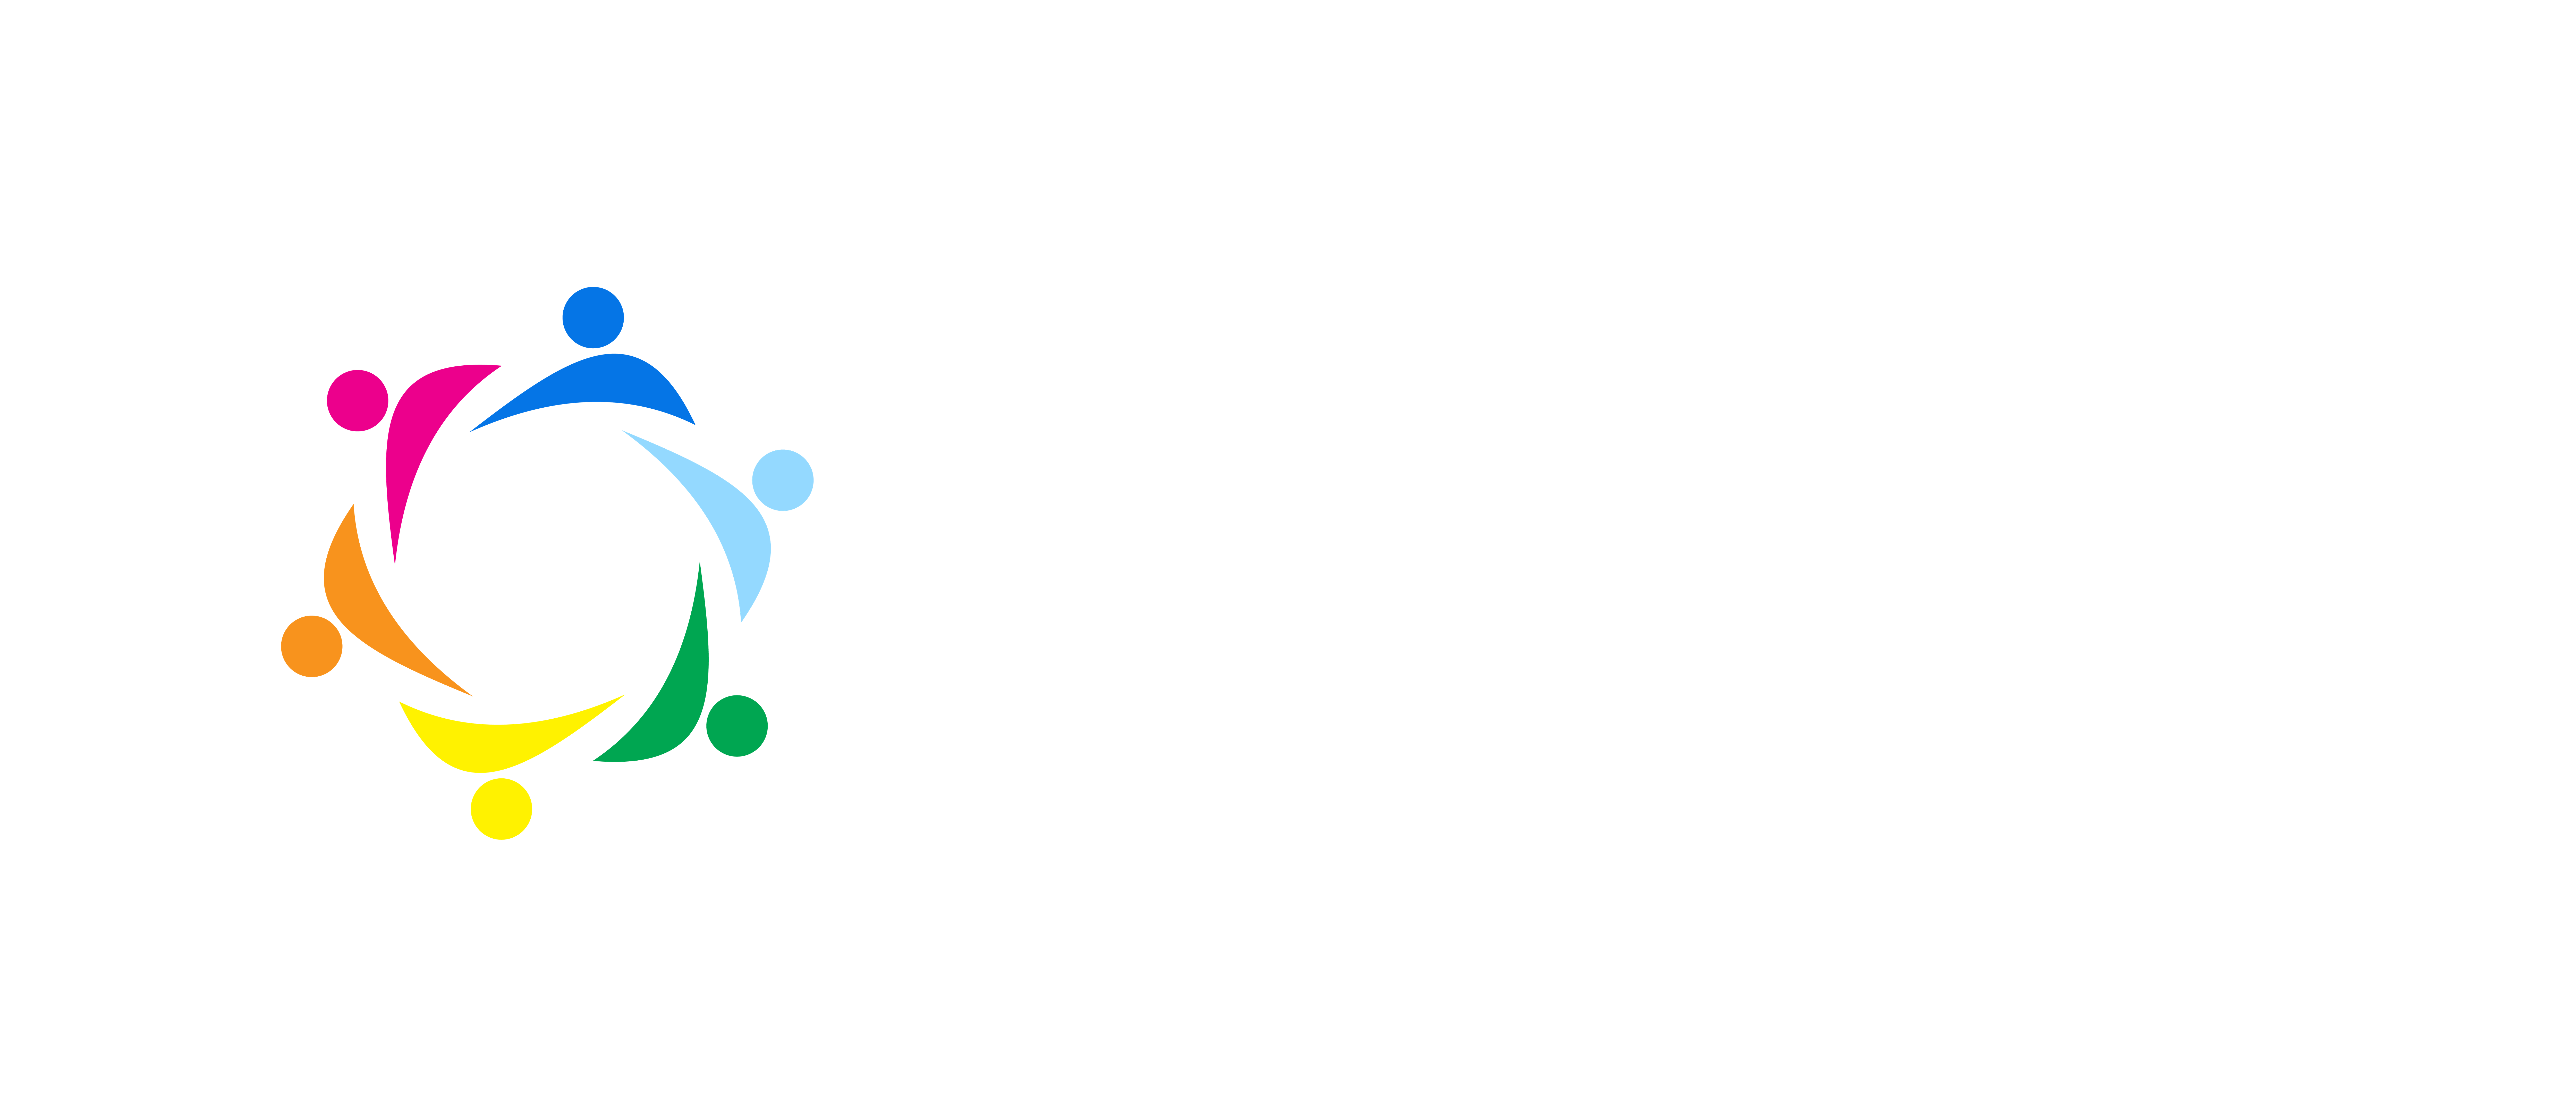 CommUNITY Mediation Service - White text